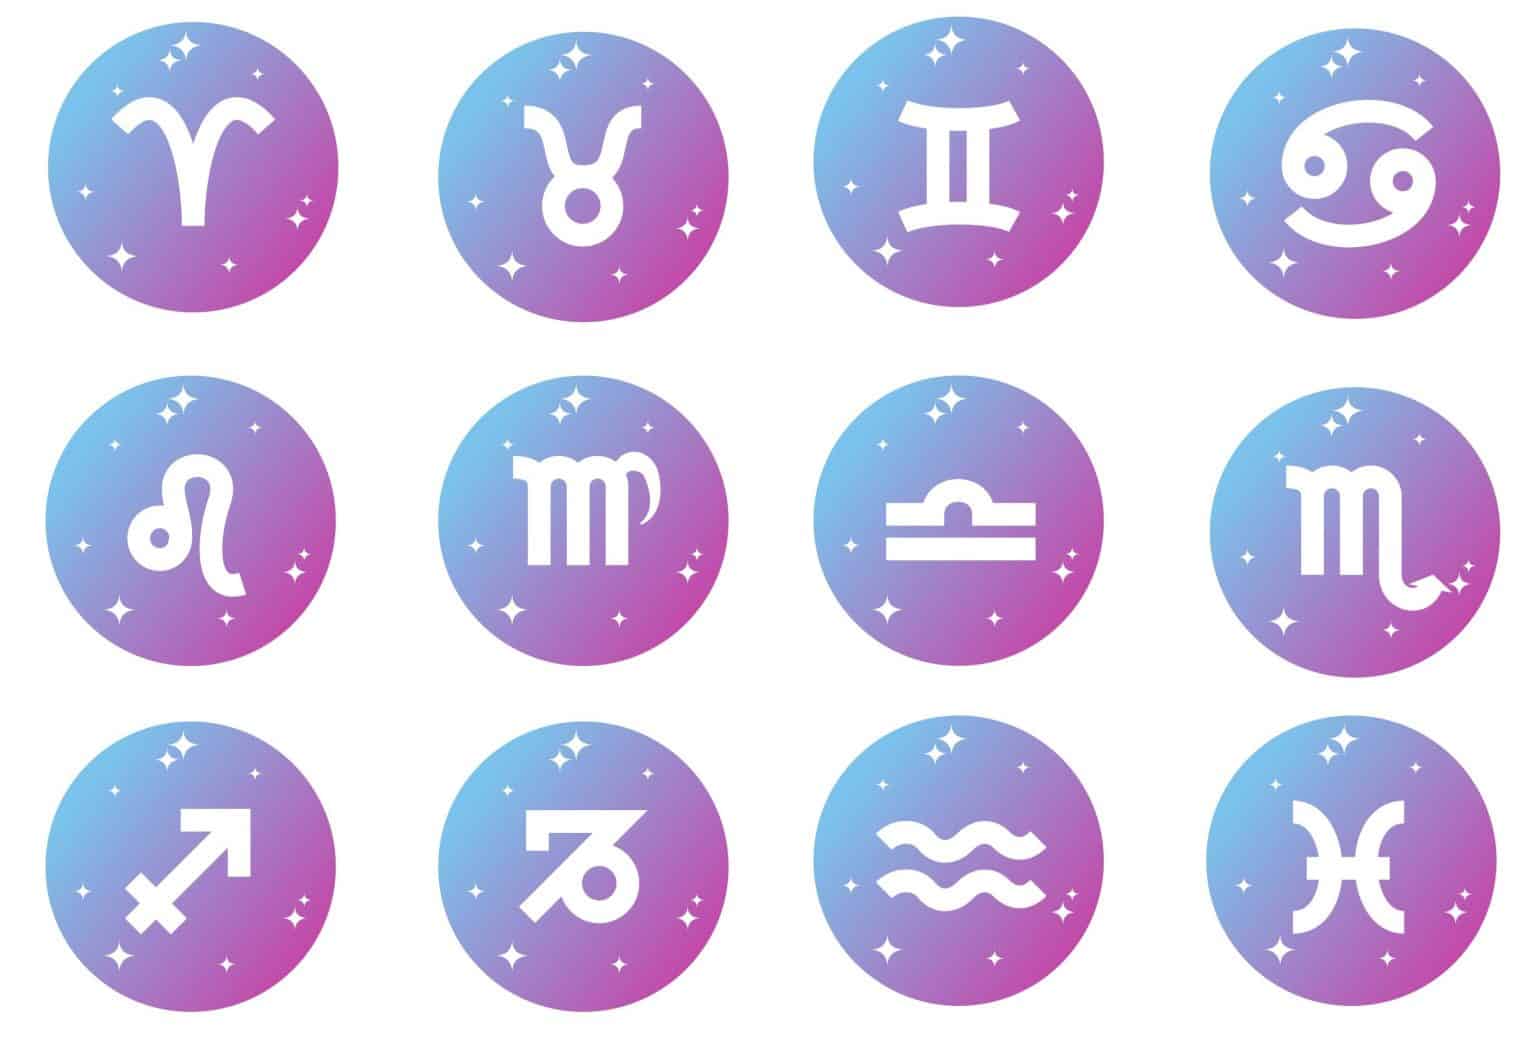 zodiac-constellations-vector-symbols-astrology-stars-signs-on-blue